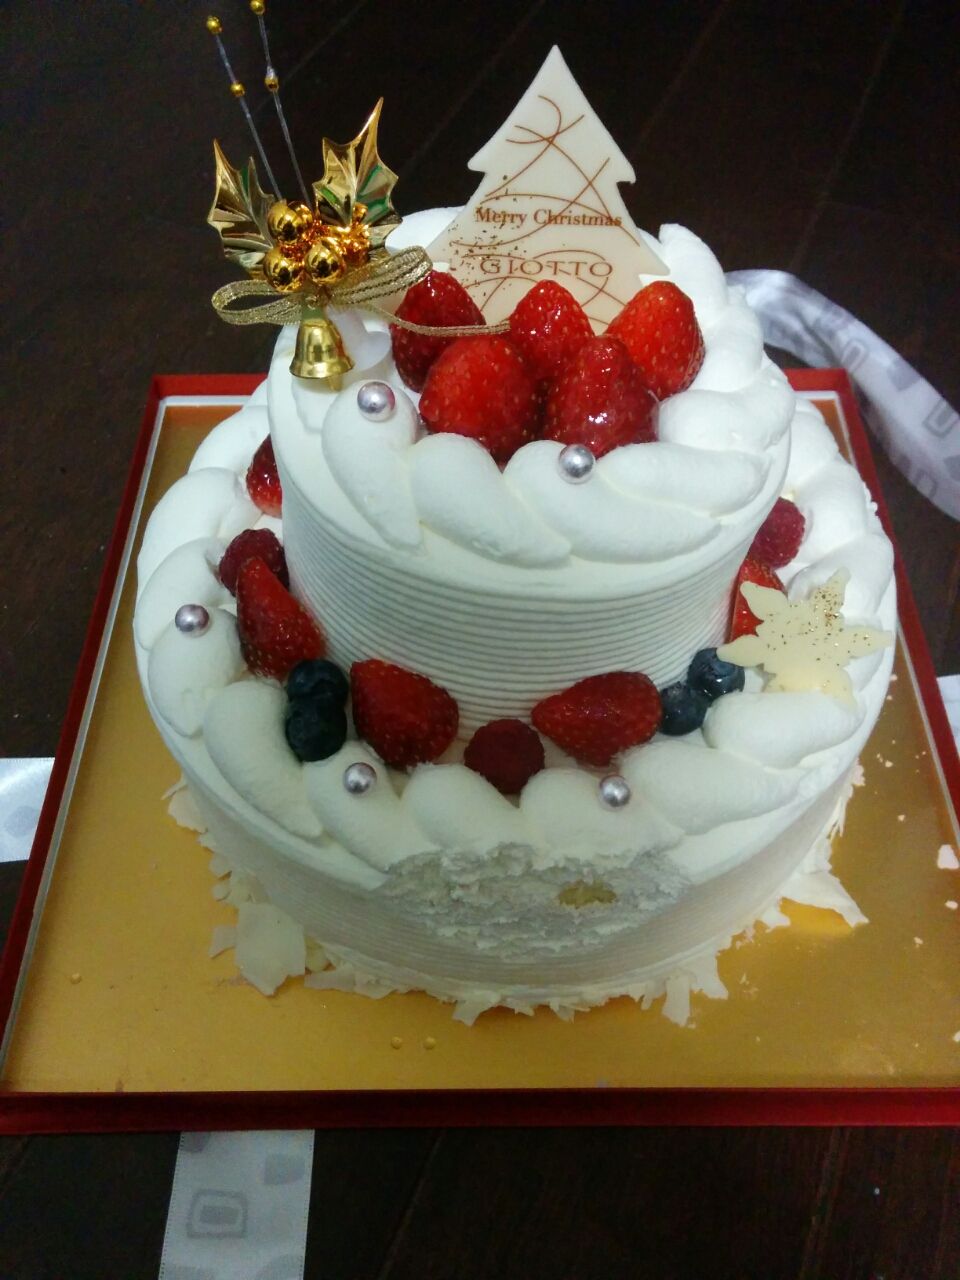 Giotto 三越銀座店 クリスマスケーキ ほぼ銀座で美味しいょのblog